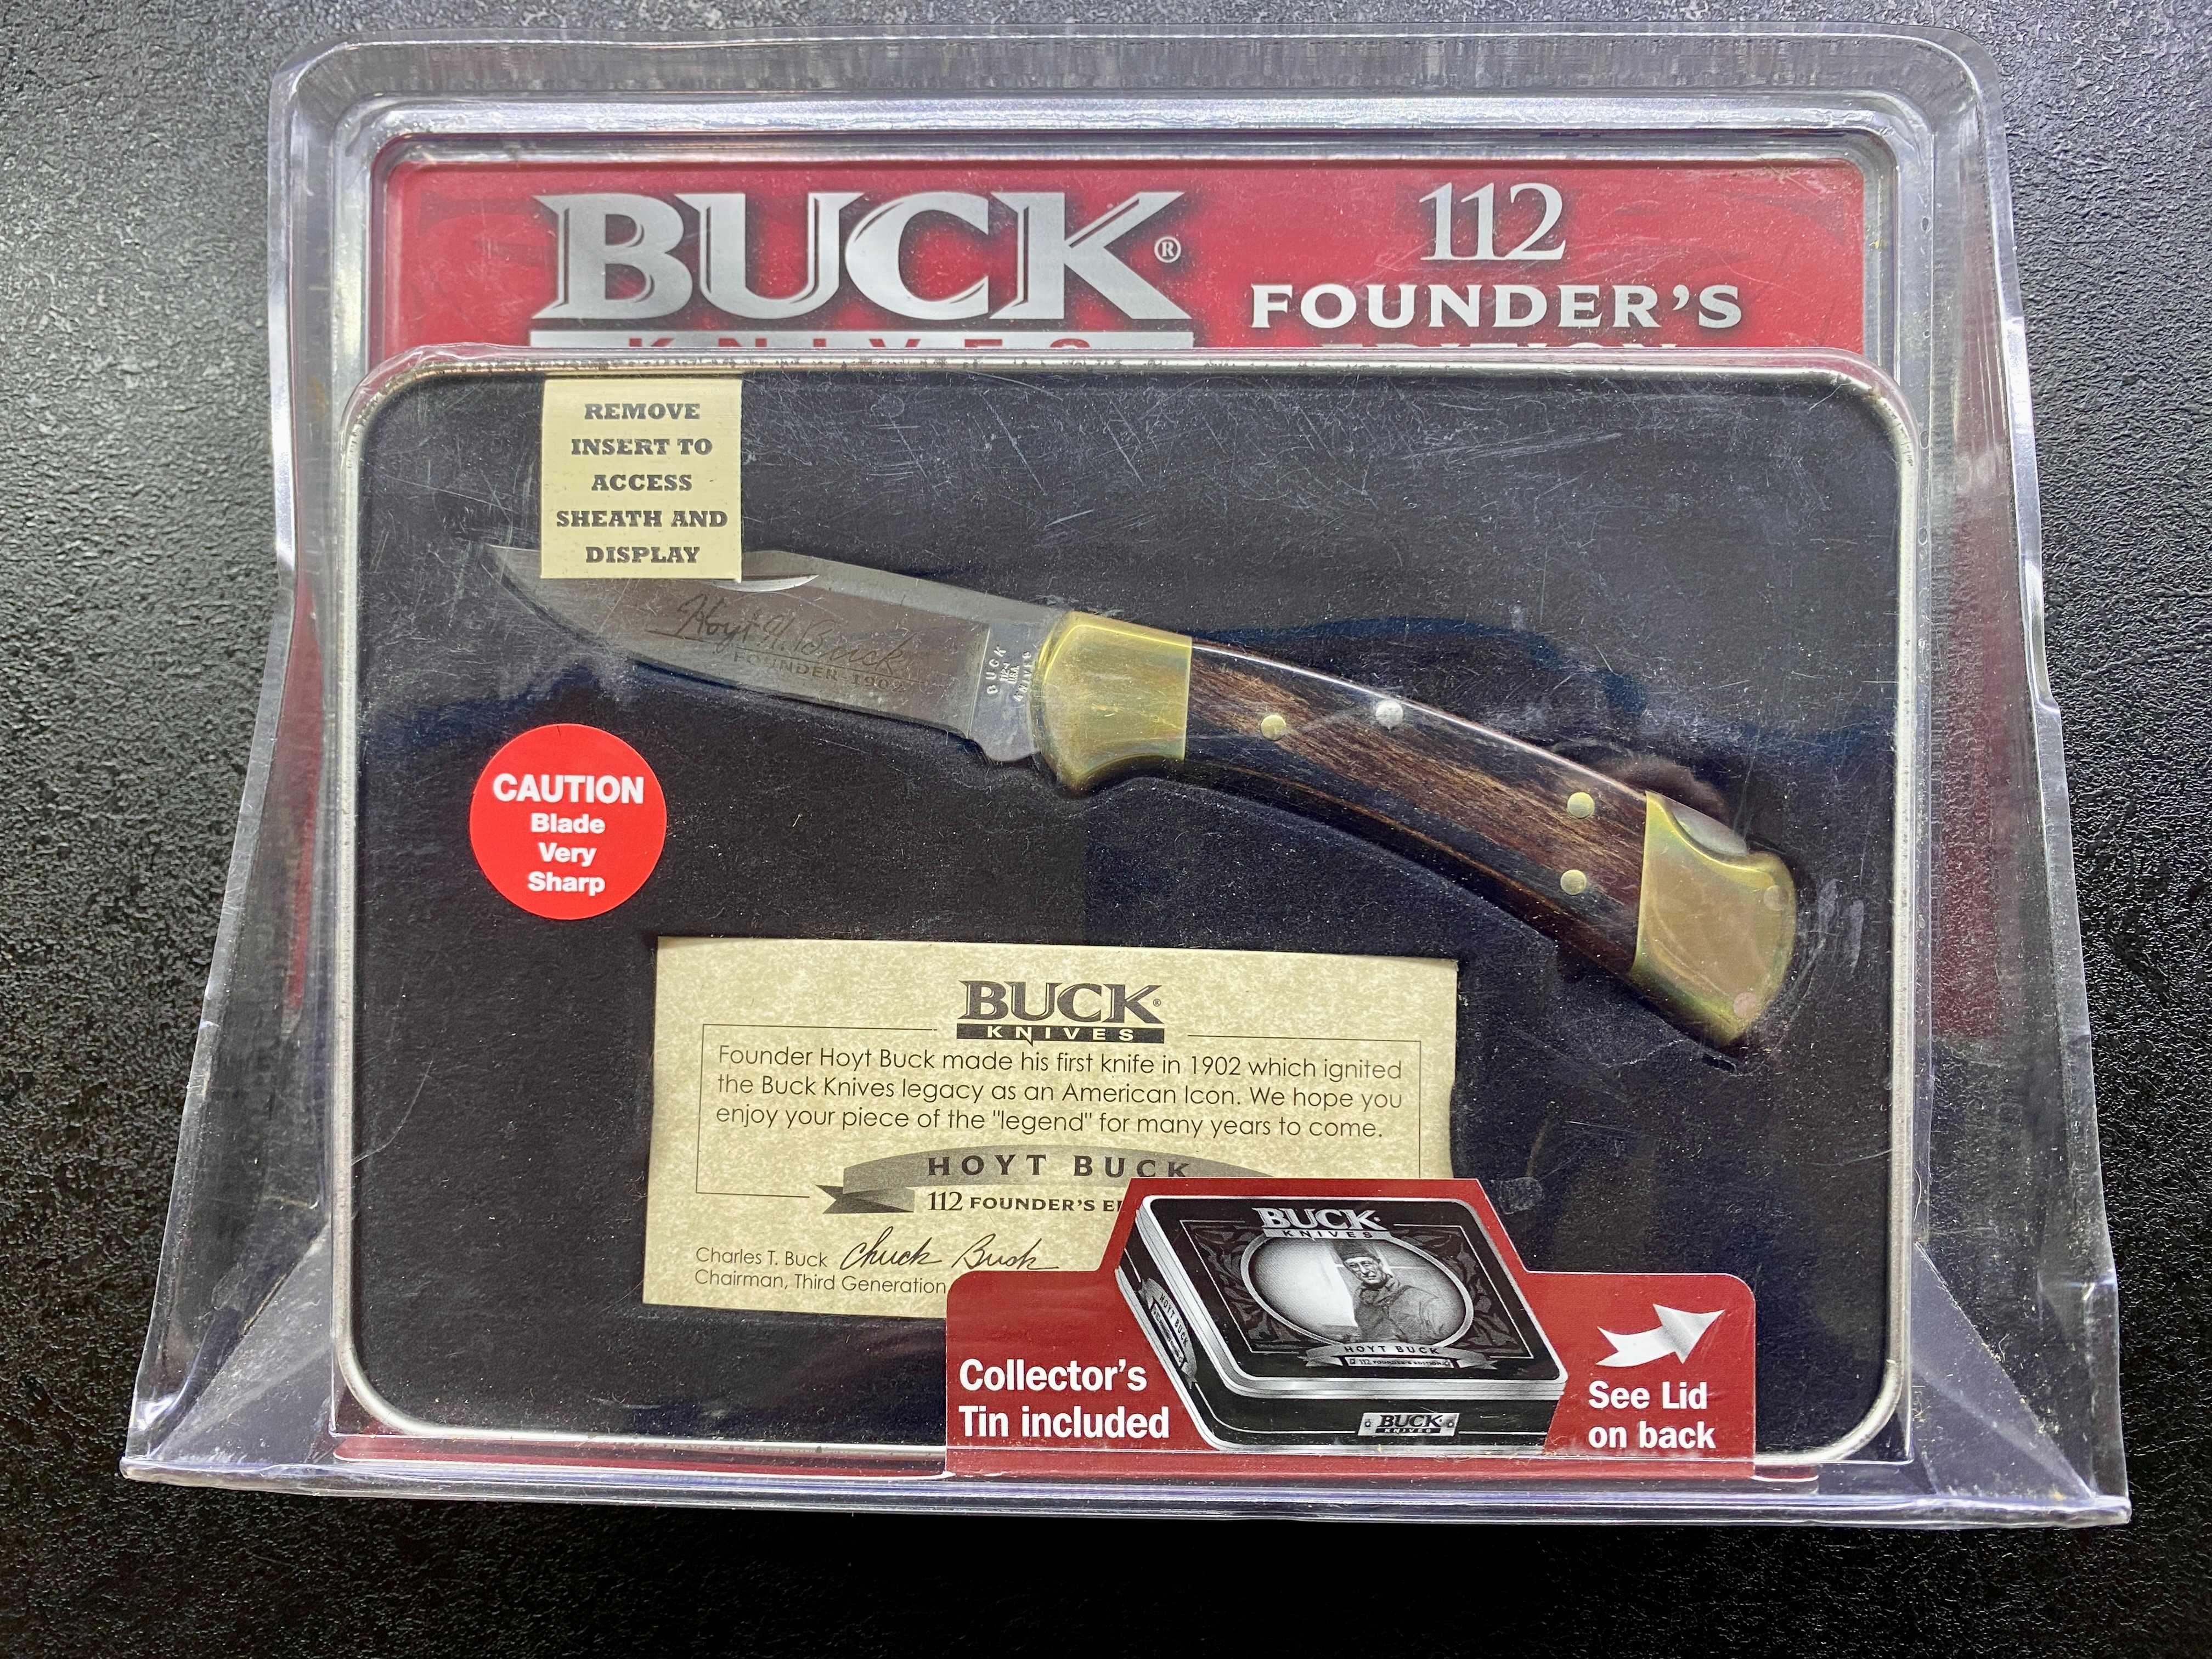 Ніж Buck 112 Founder's Edition - Hoyt Buck, 2006 р.в. США